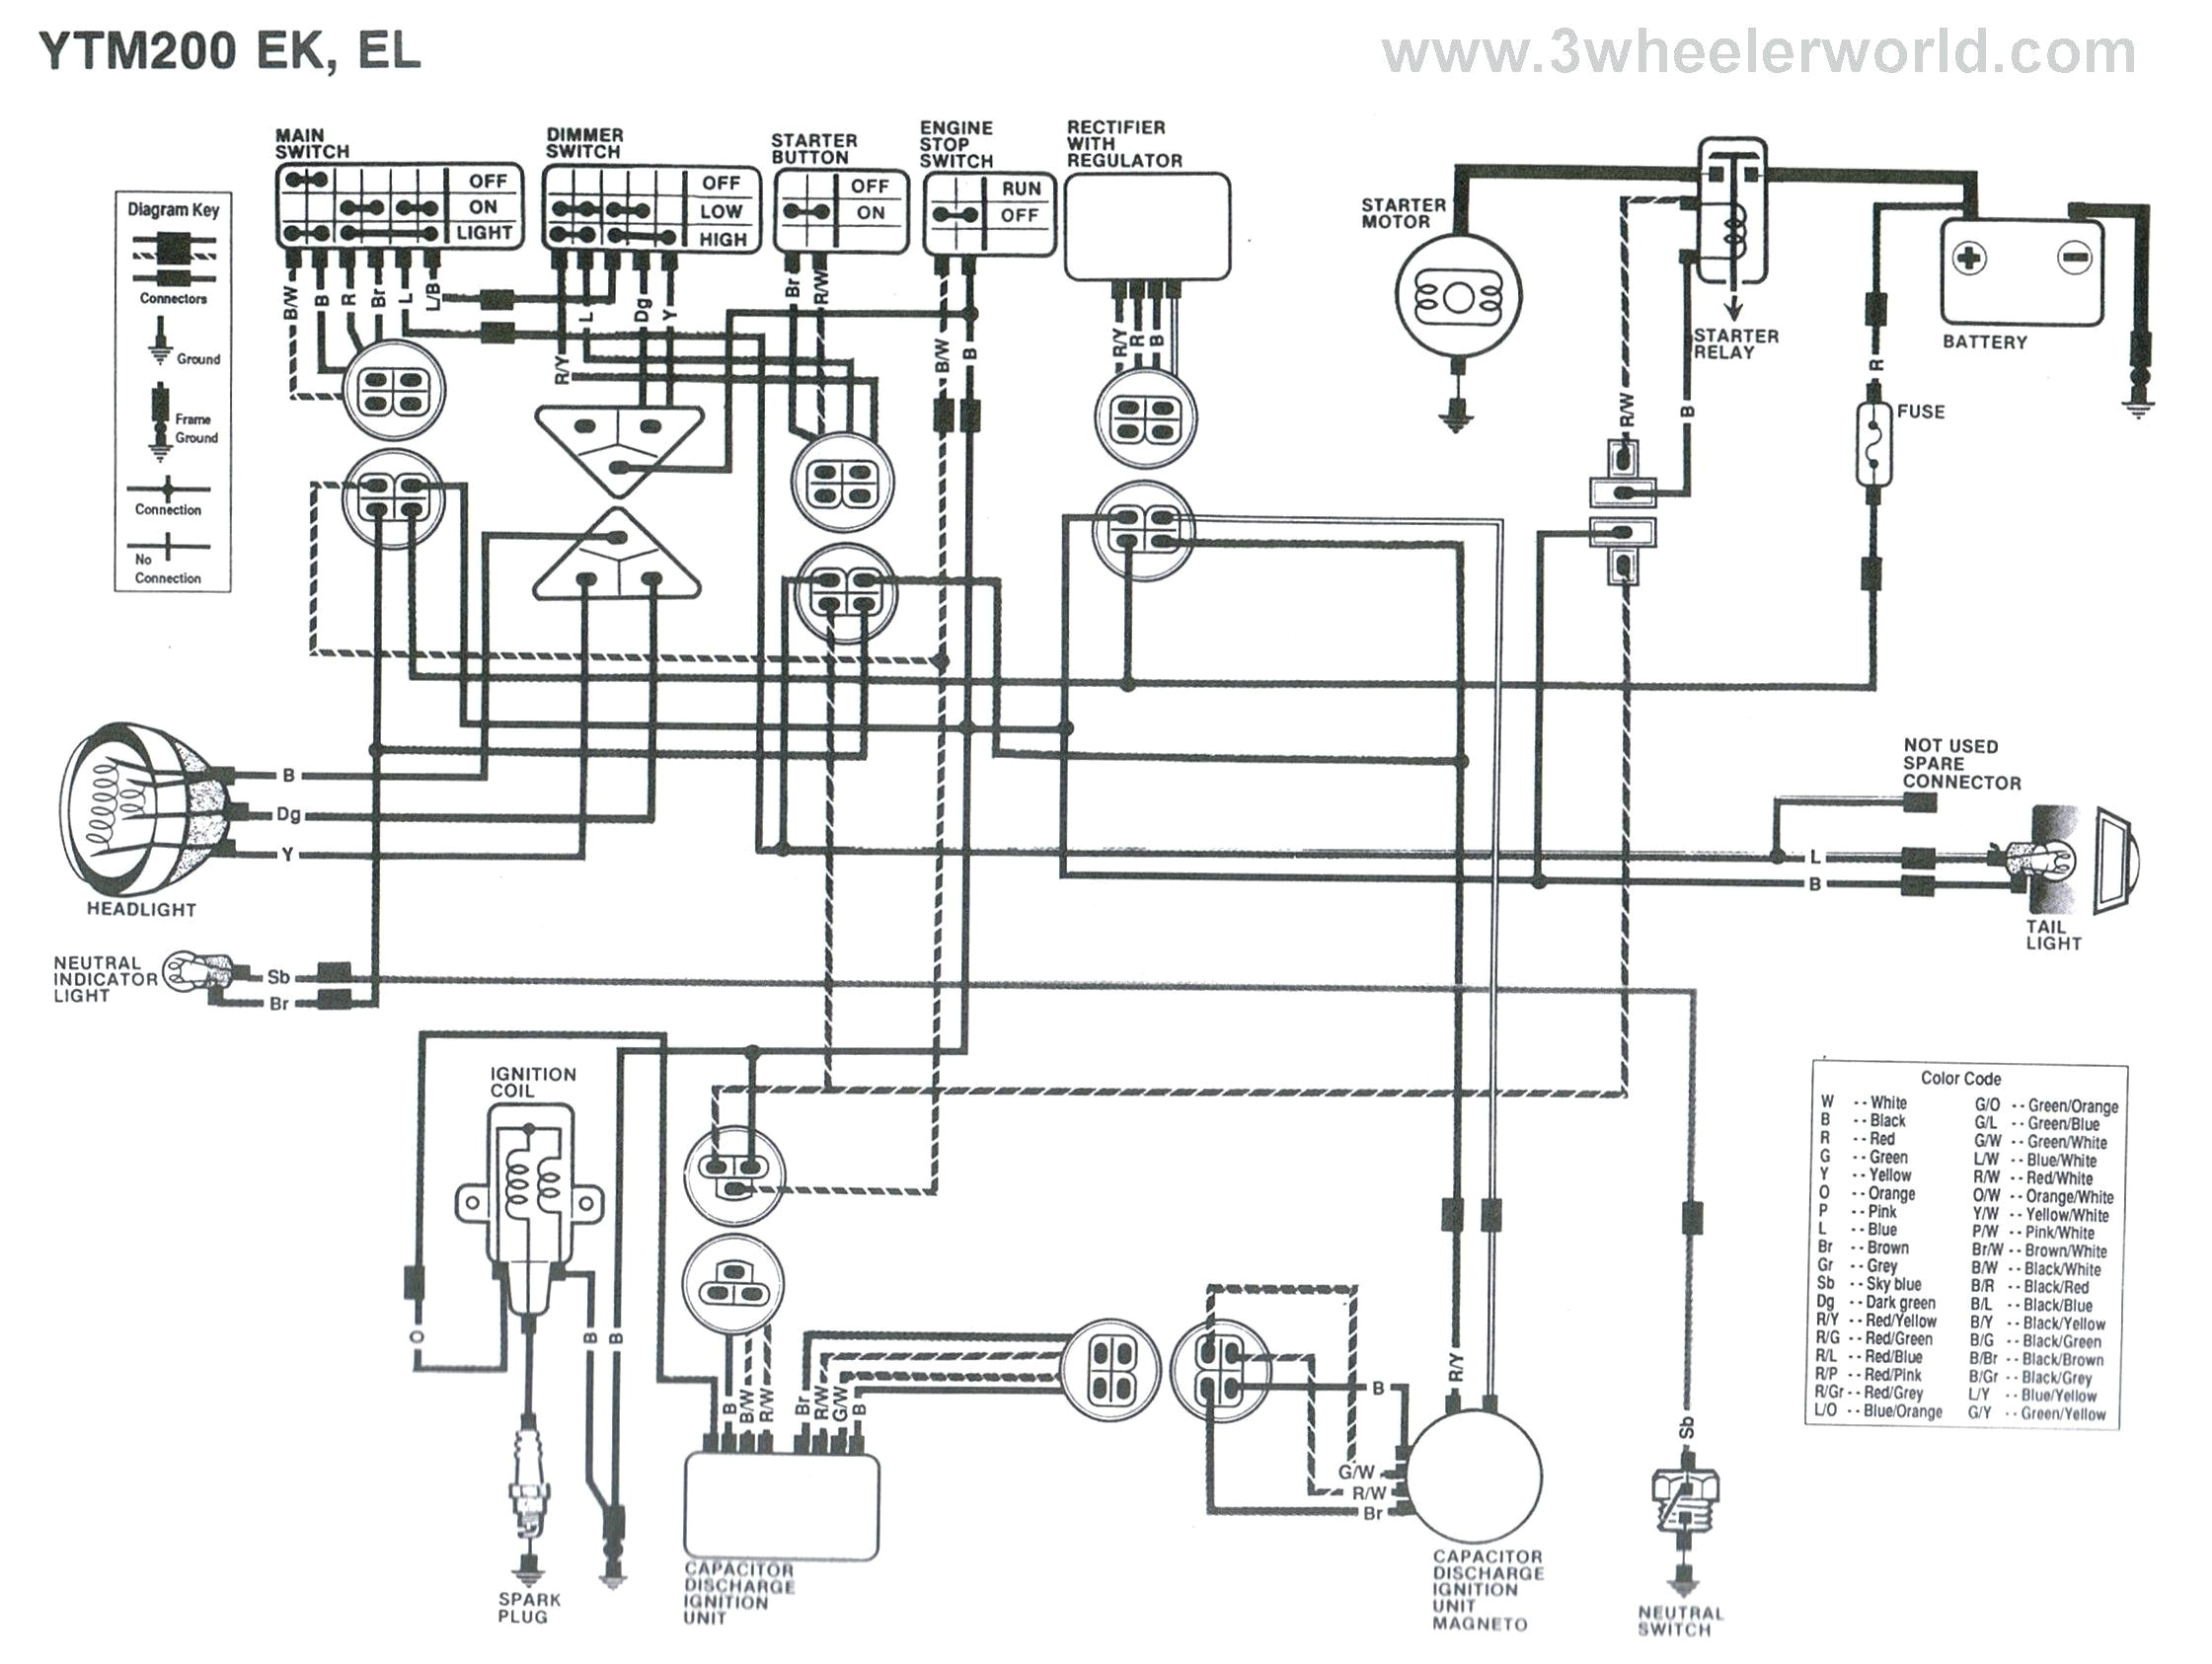 yamaha outboard wiring diagram valid yamaha outboard wiring diagram awesome tohatsu 30hp wiring diagram of yamaha outboard wiring diagram png